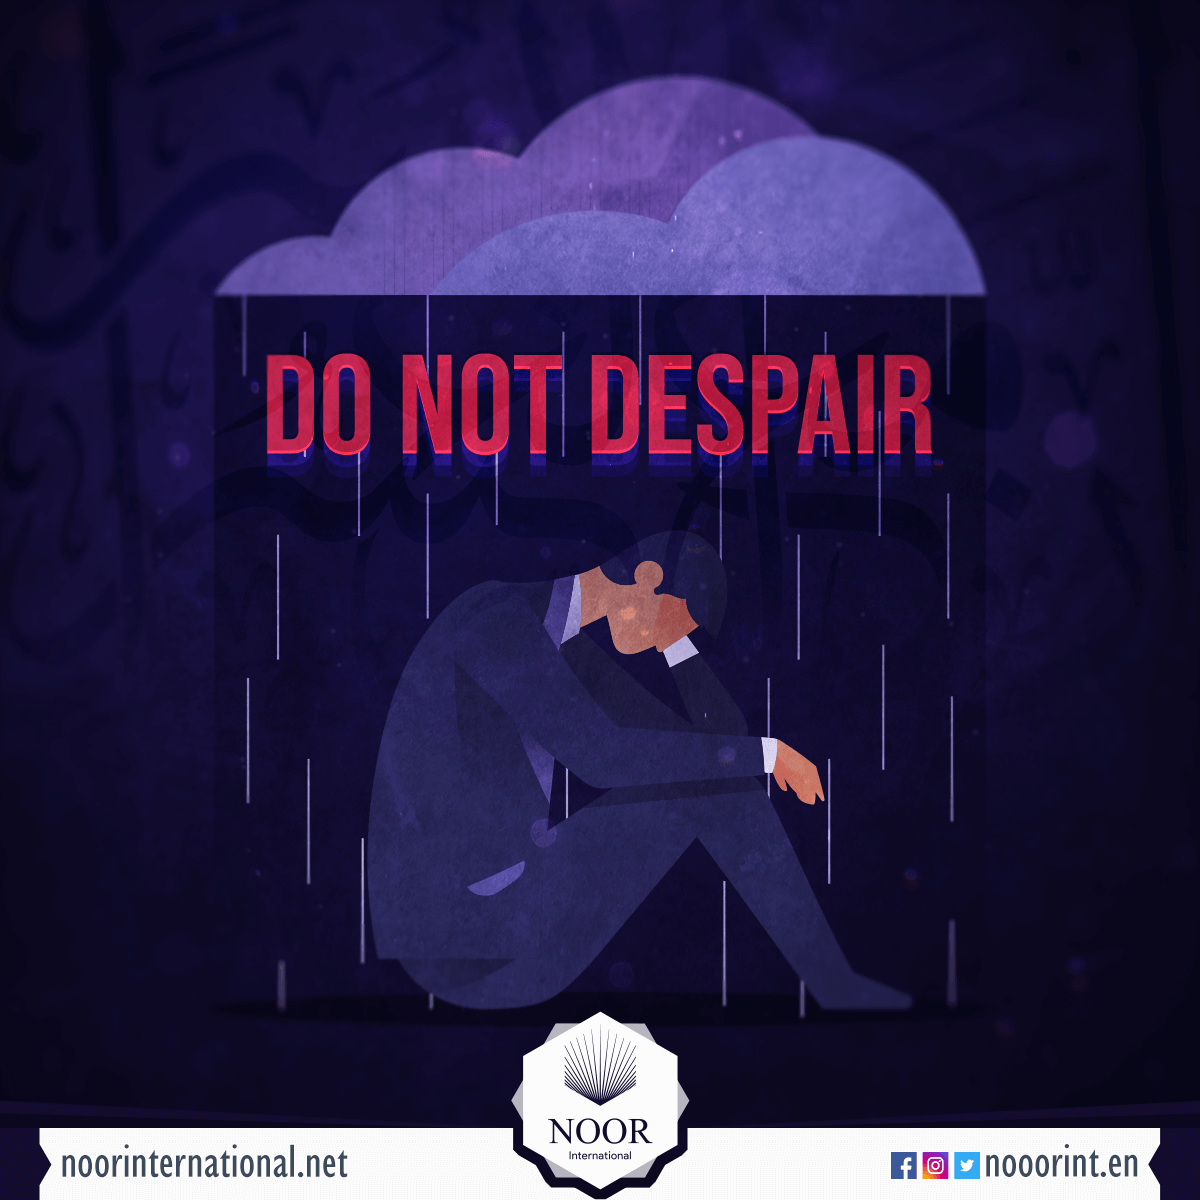 Do not despair